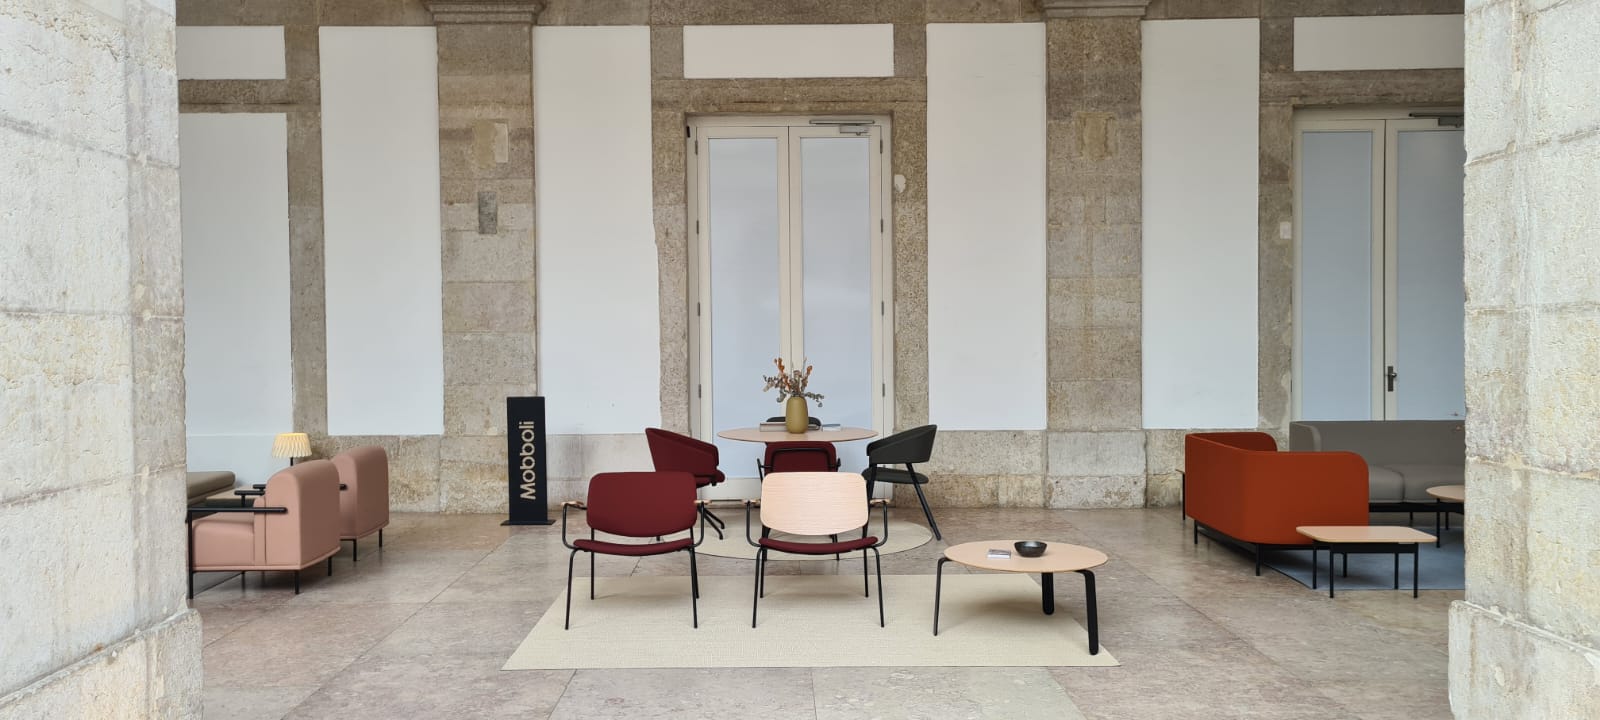 Design Room Lisboa - Mobboli - 01